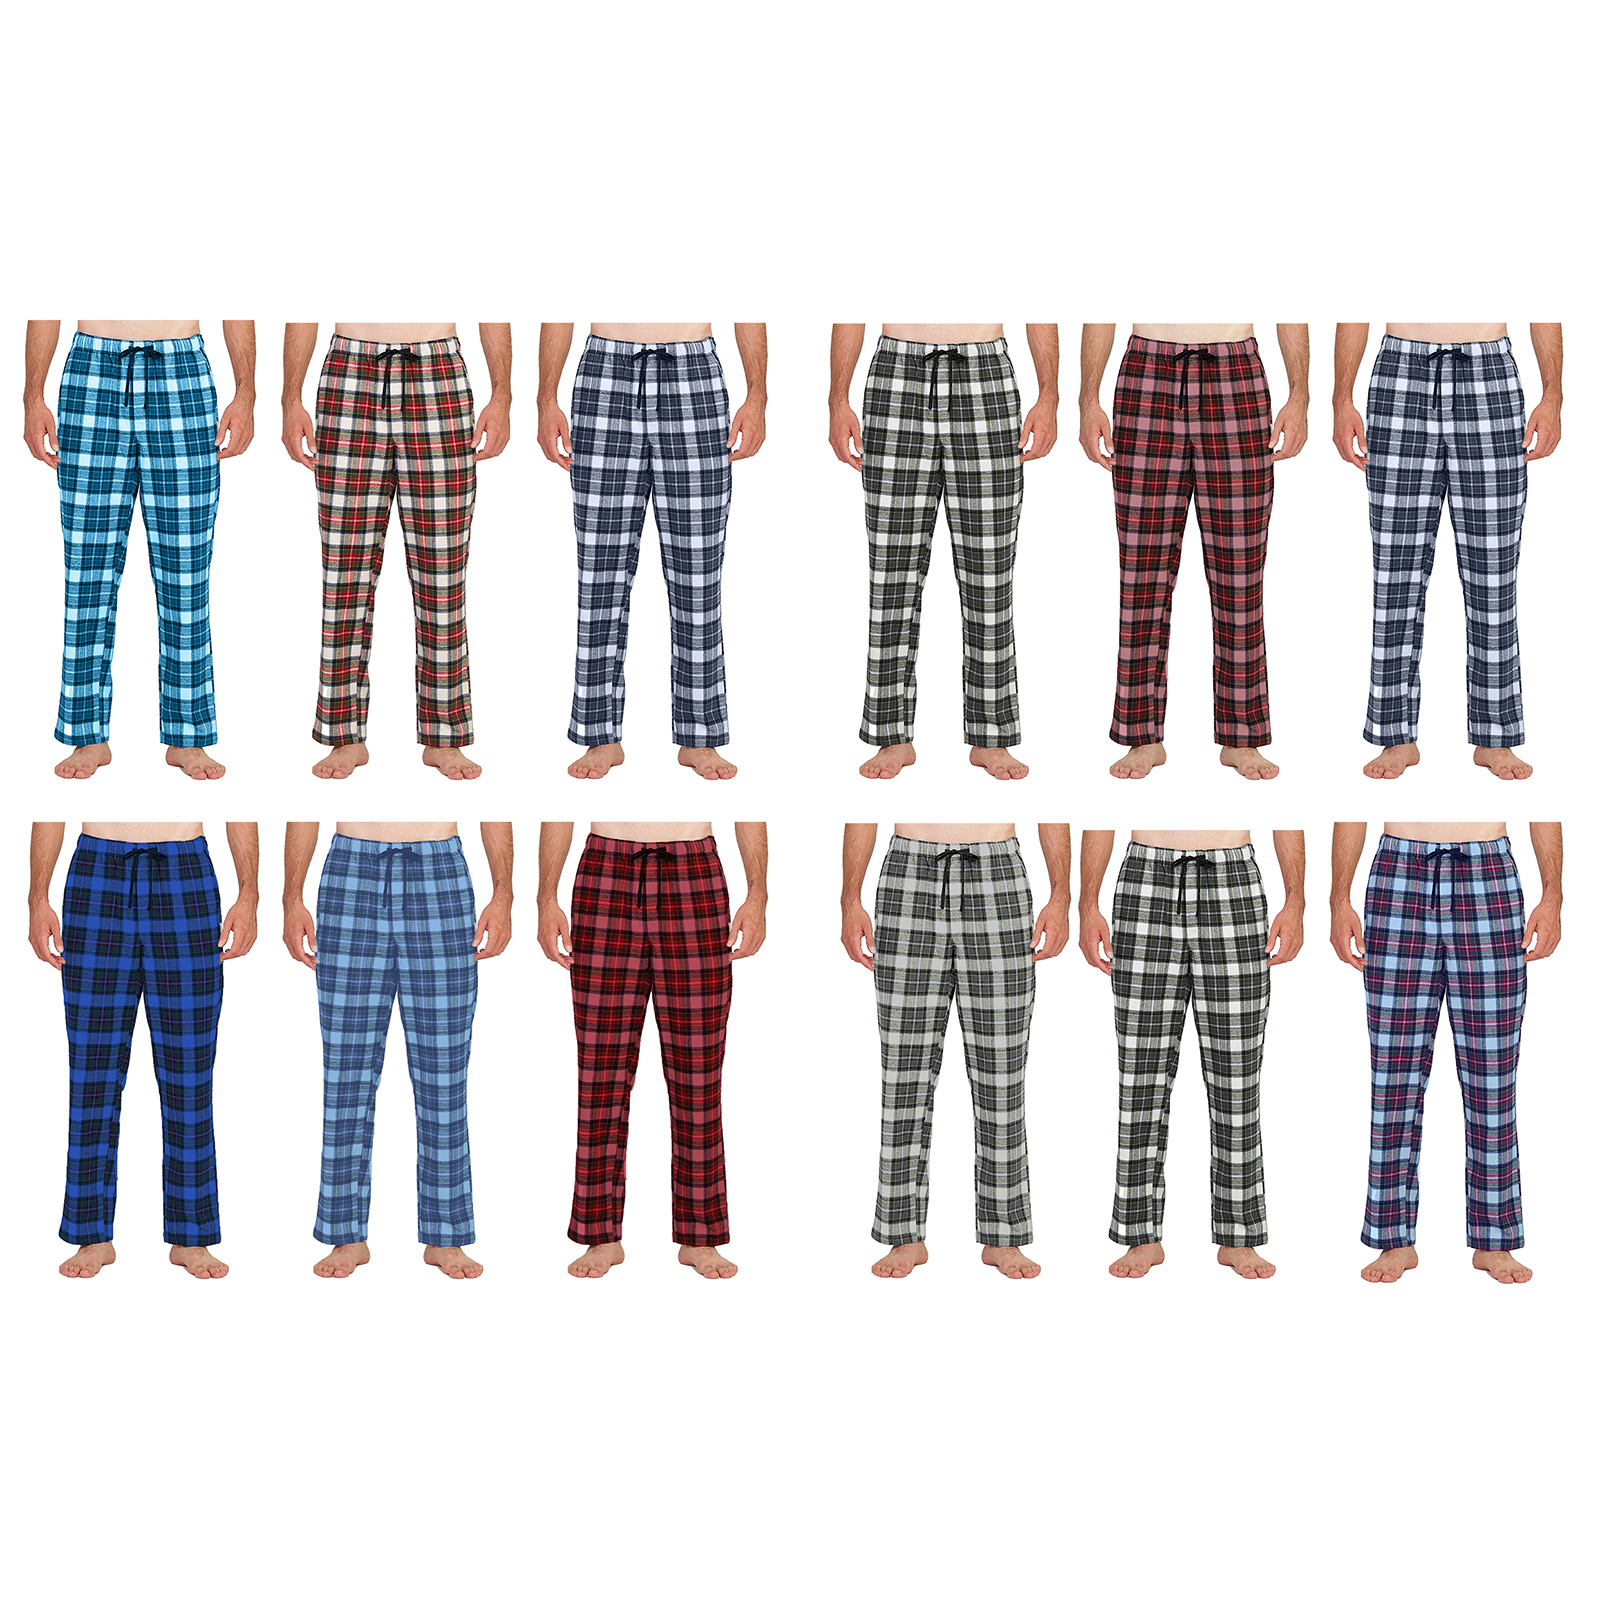 2-Pack: Men's Soft 100% Cotton Flannel Plaid Lounge Pajama Sleep Pants - Medium